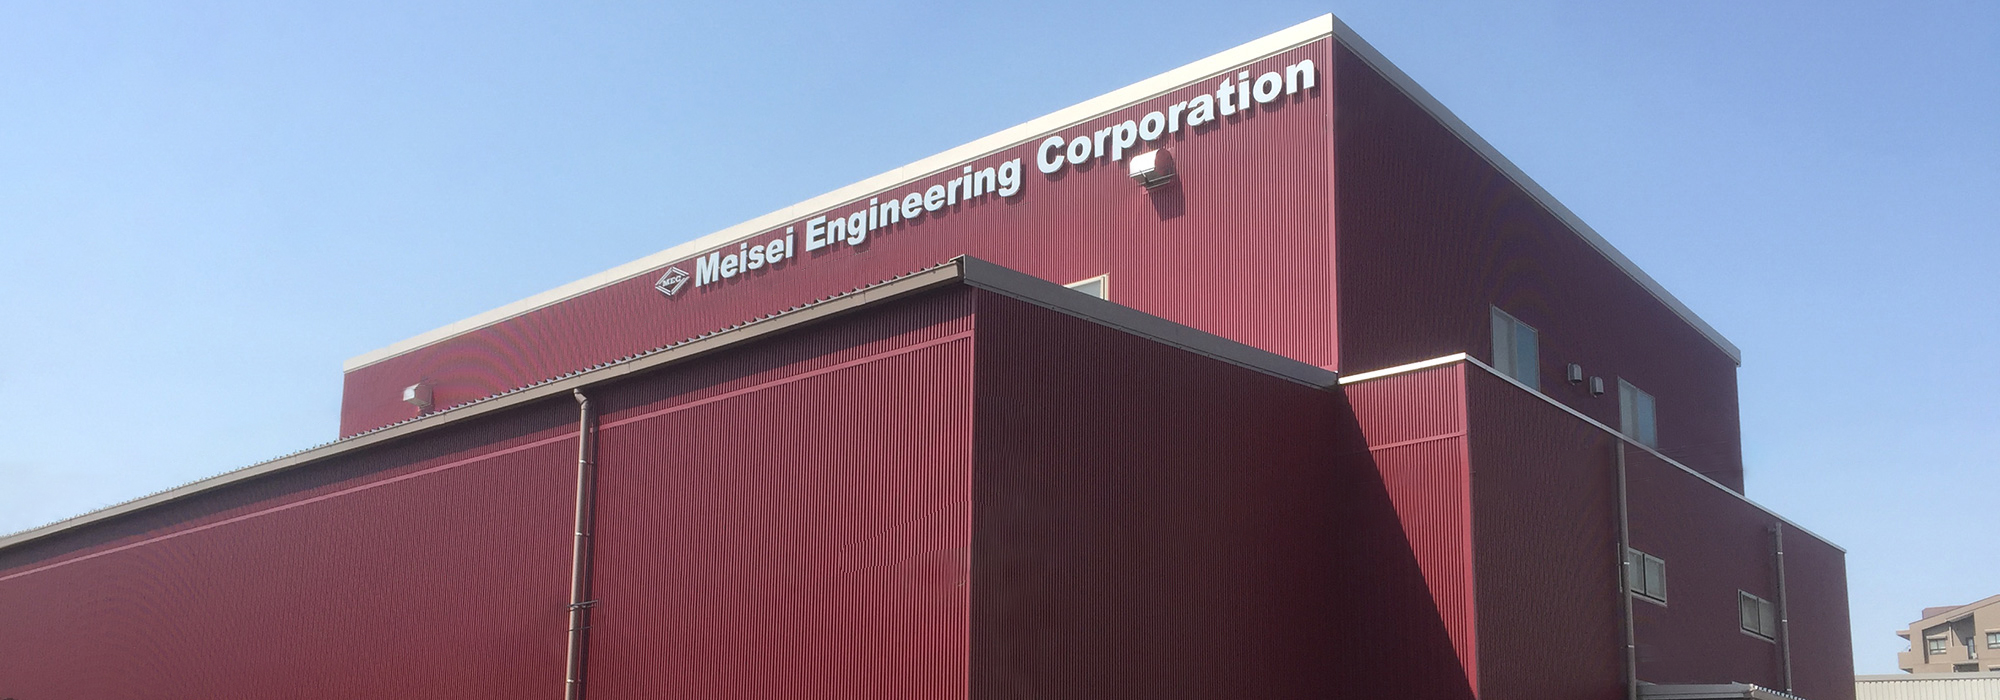 Meisei Engineering Corporation